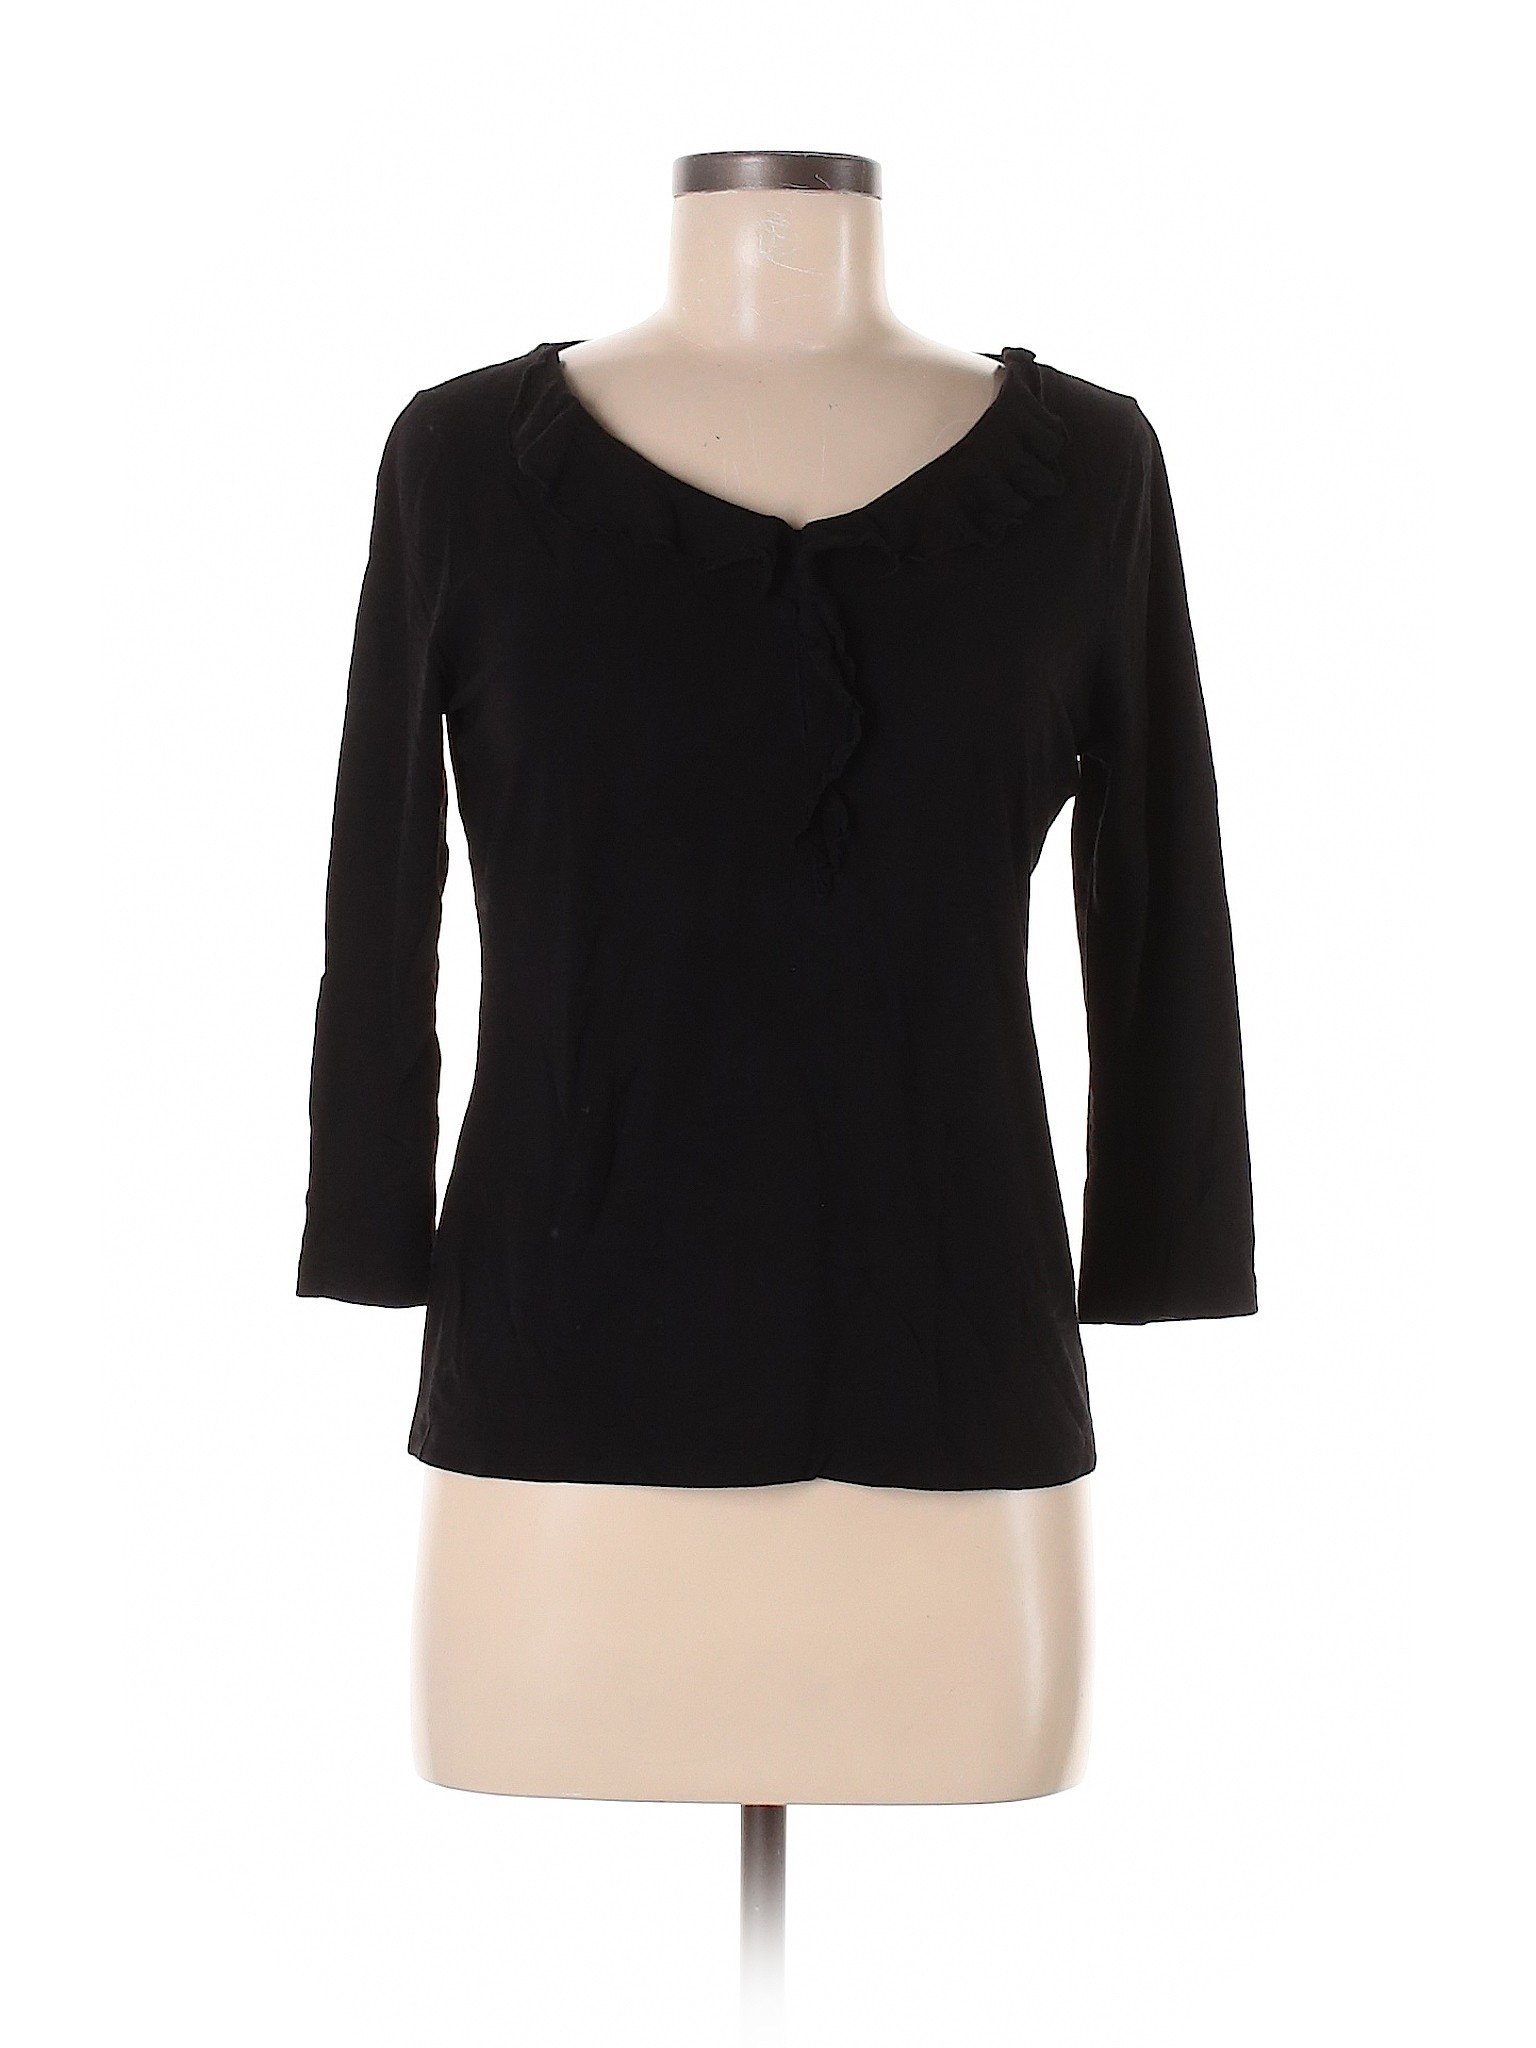 Talbots Women Black 3/4 Sleeve Top M | eBay